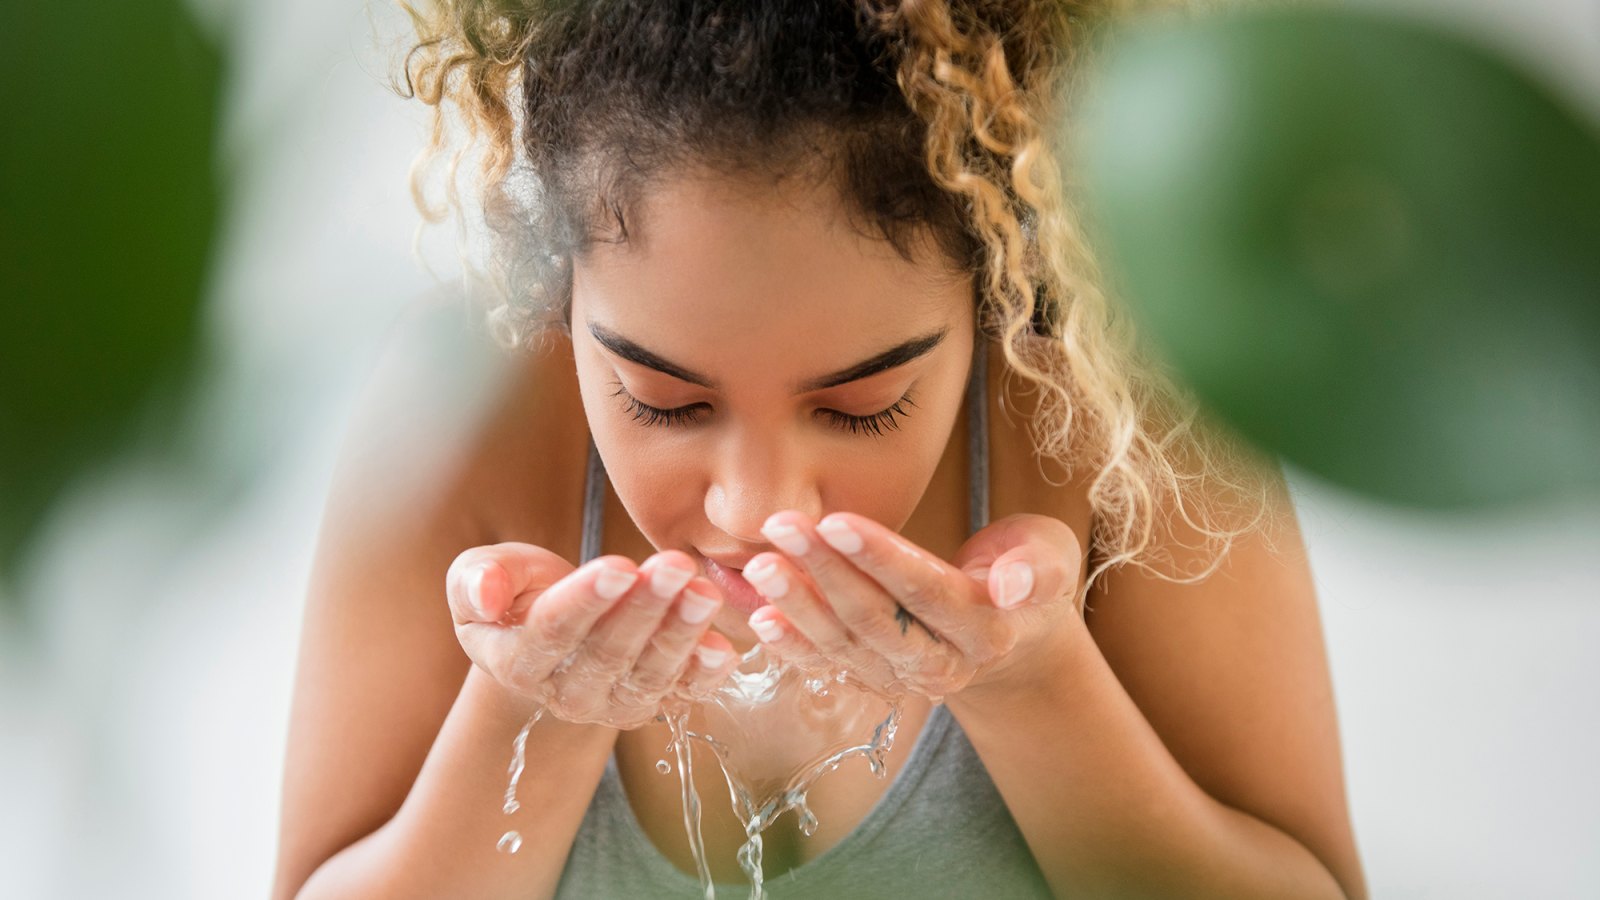 Woman Washing Face